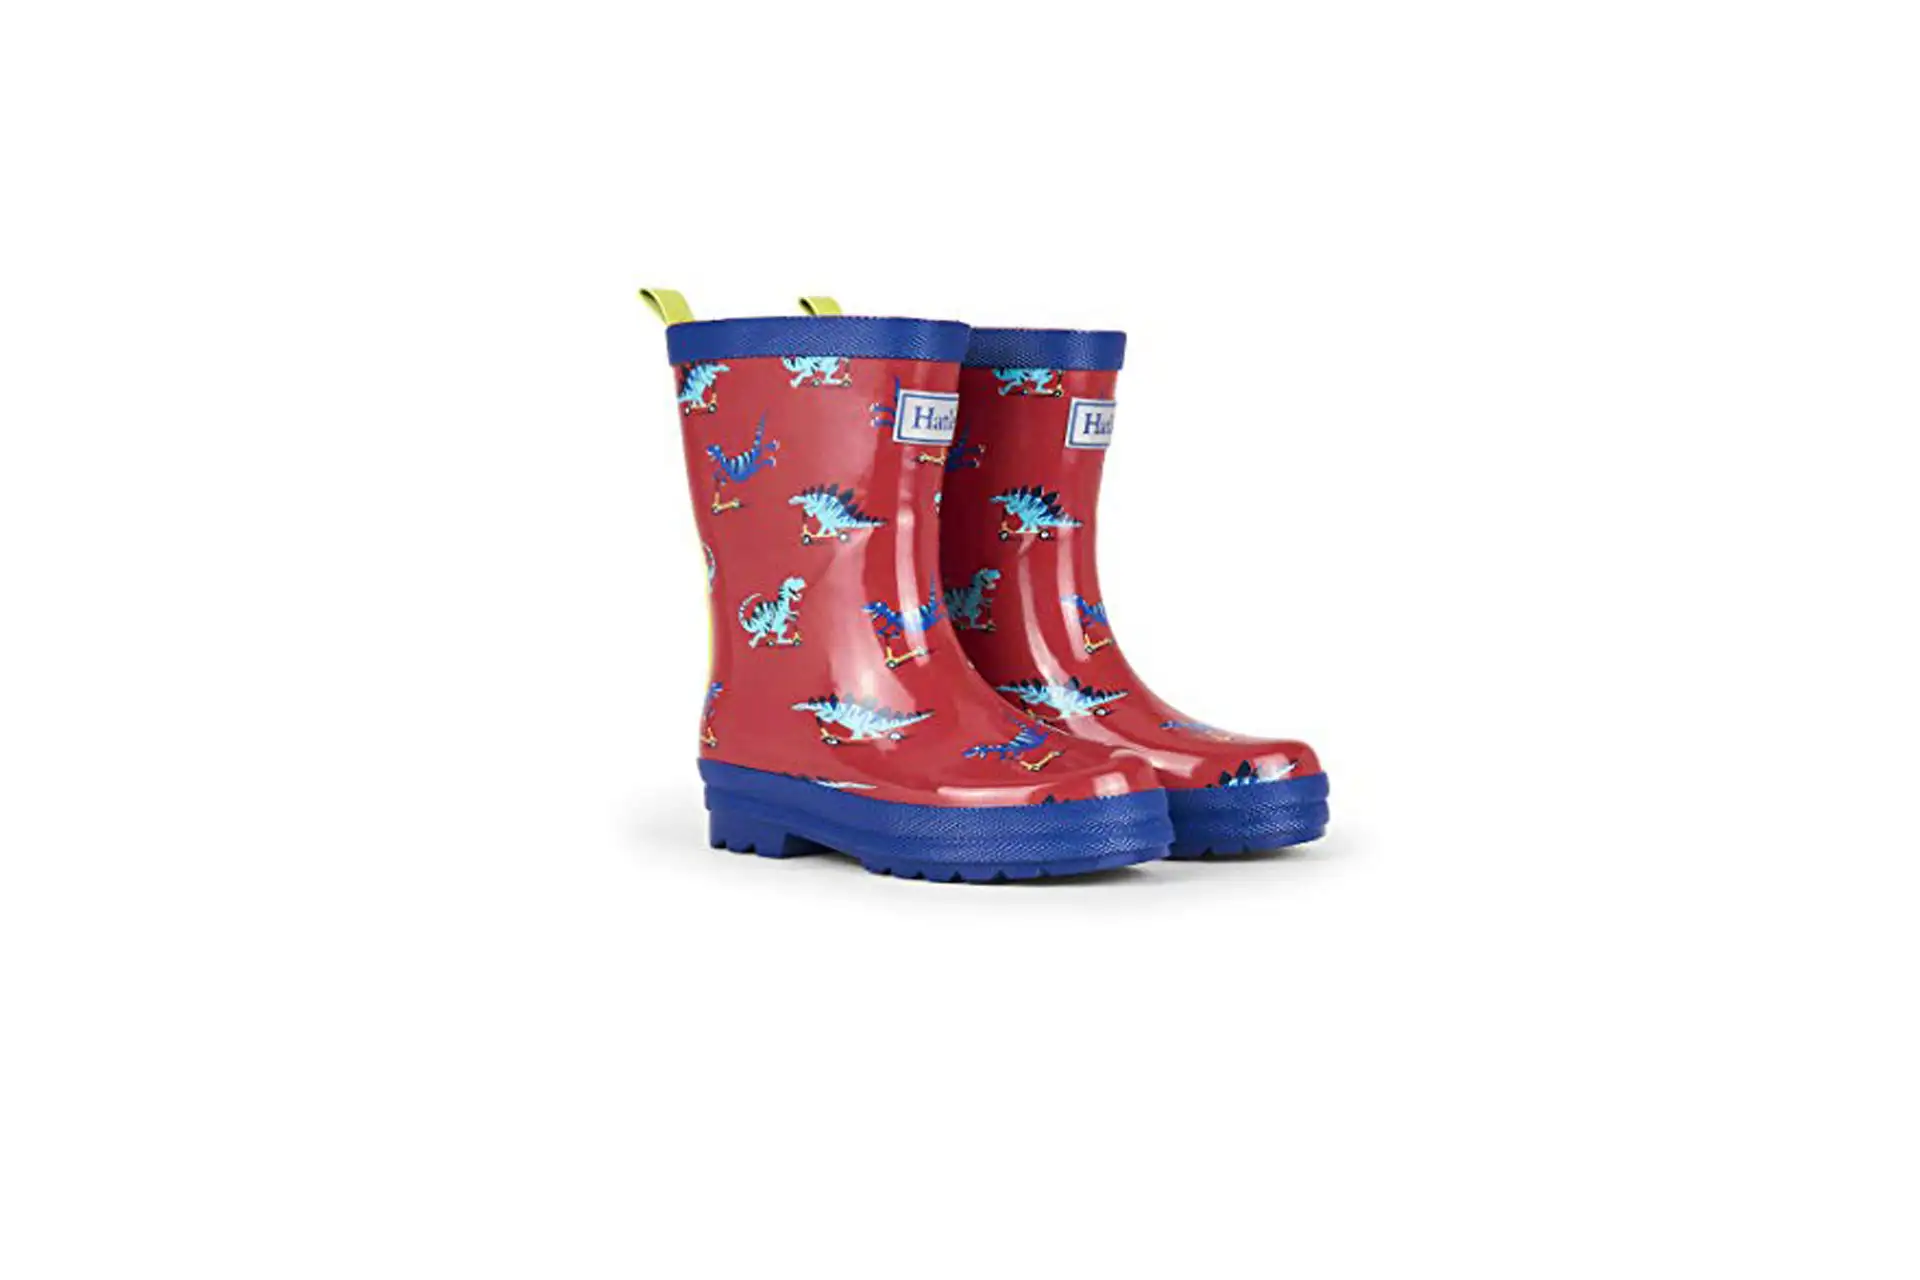 Kids Rain Boots; Courtesy of Amazon